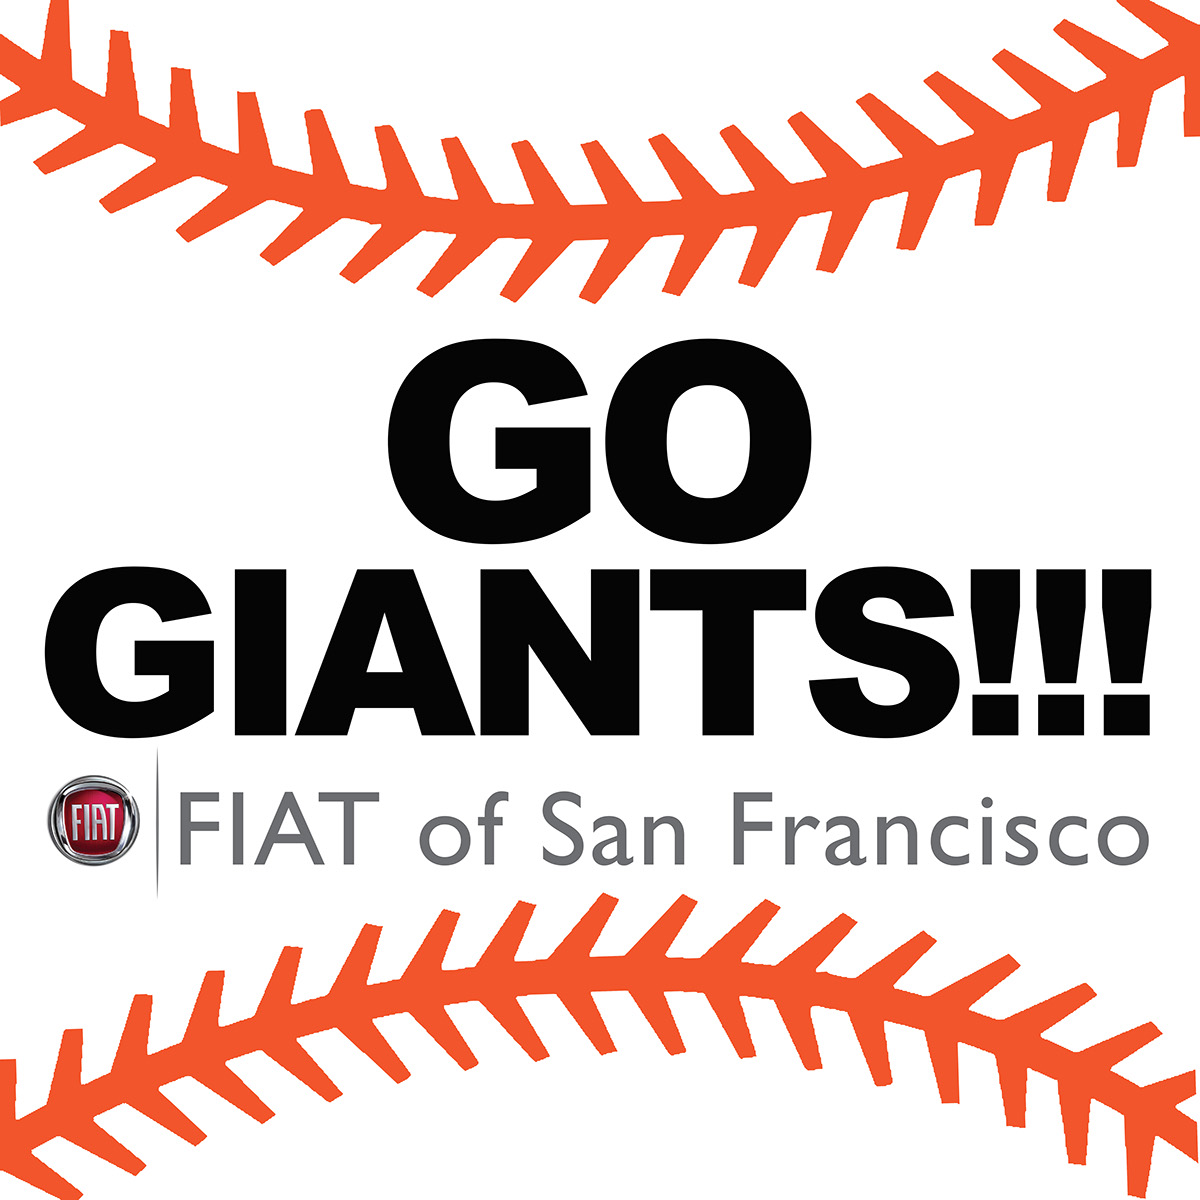 Fiat SF Fiat San Francisco SF Giants Giants Opening Day